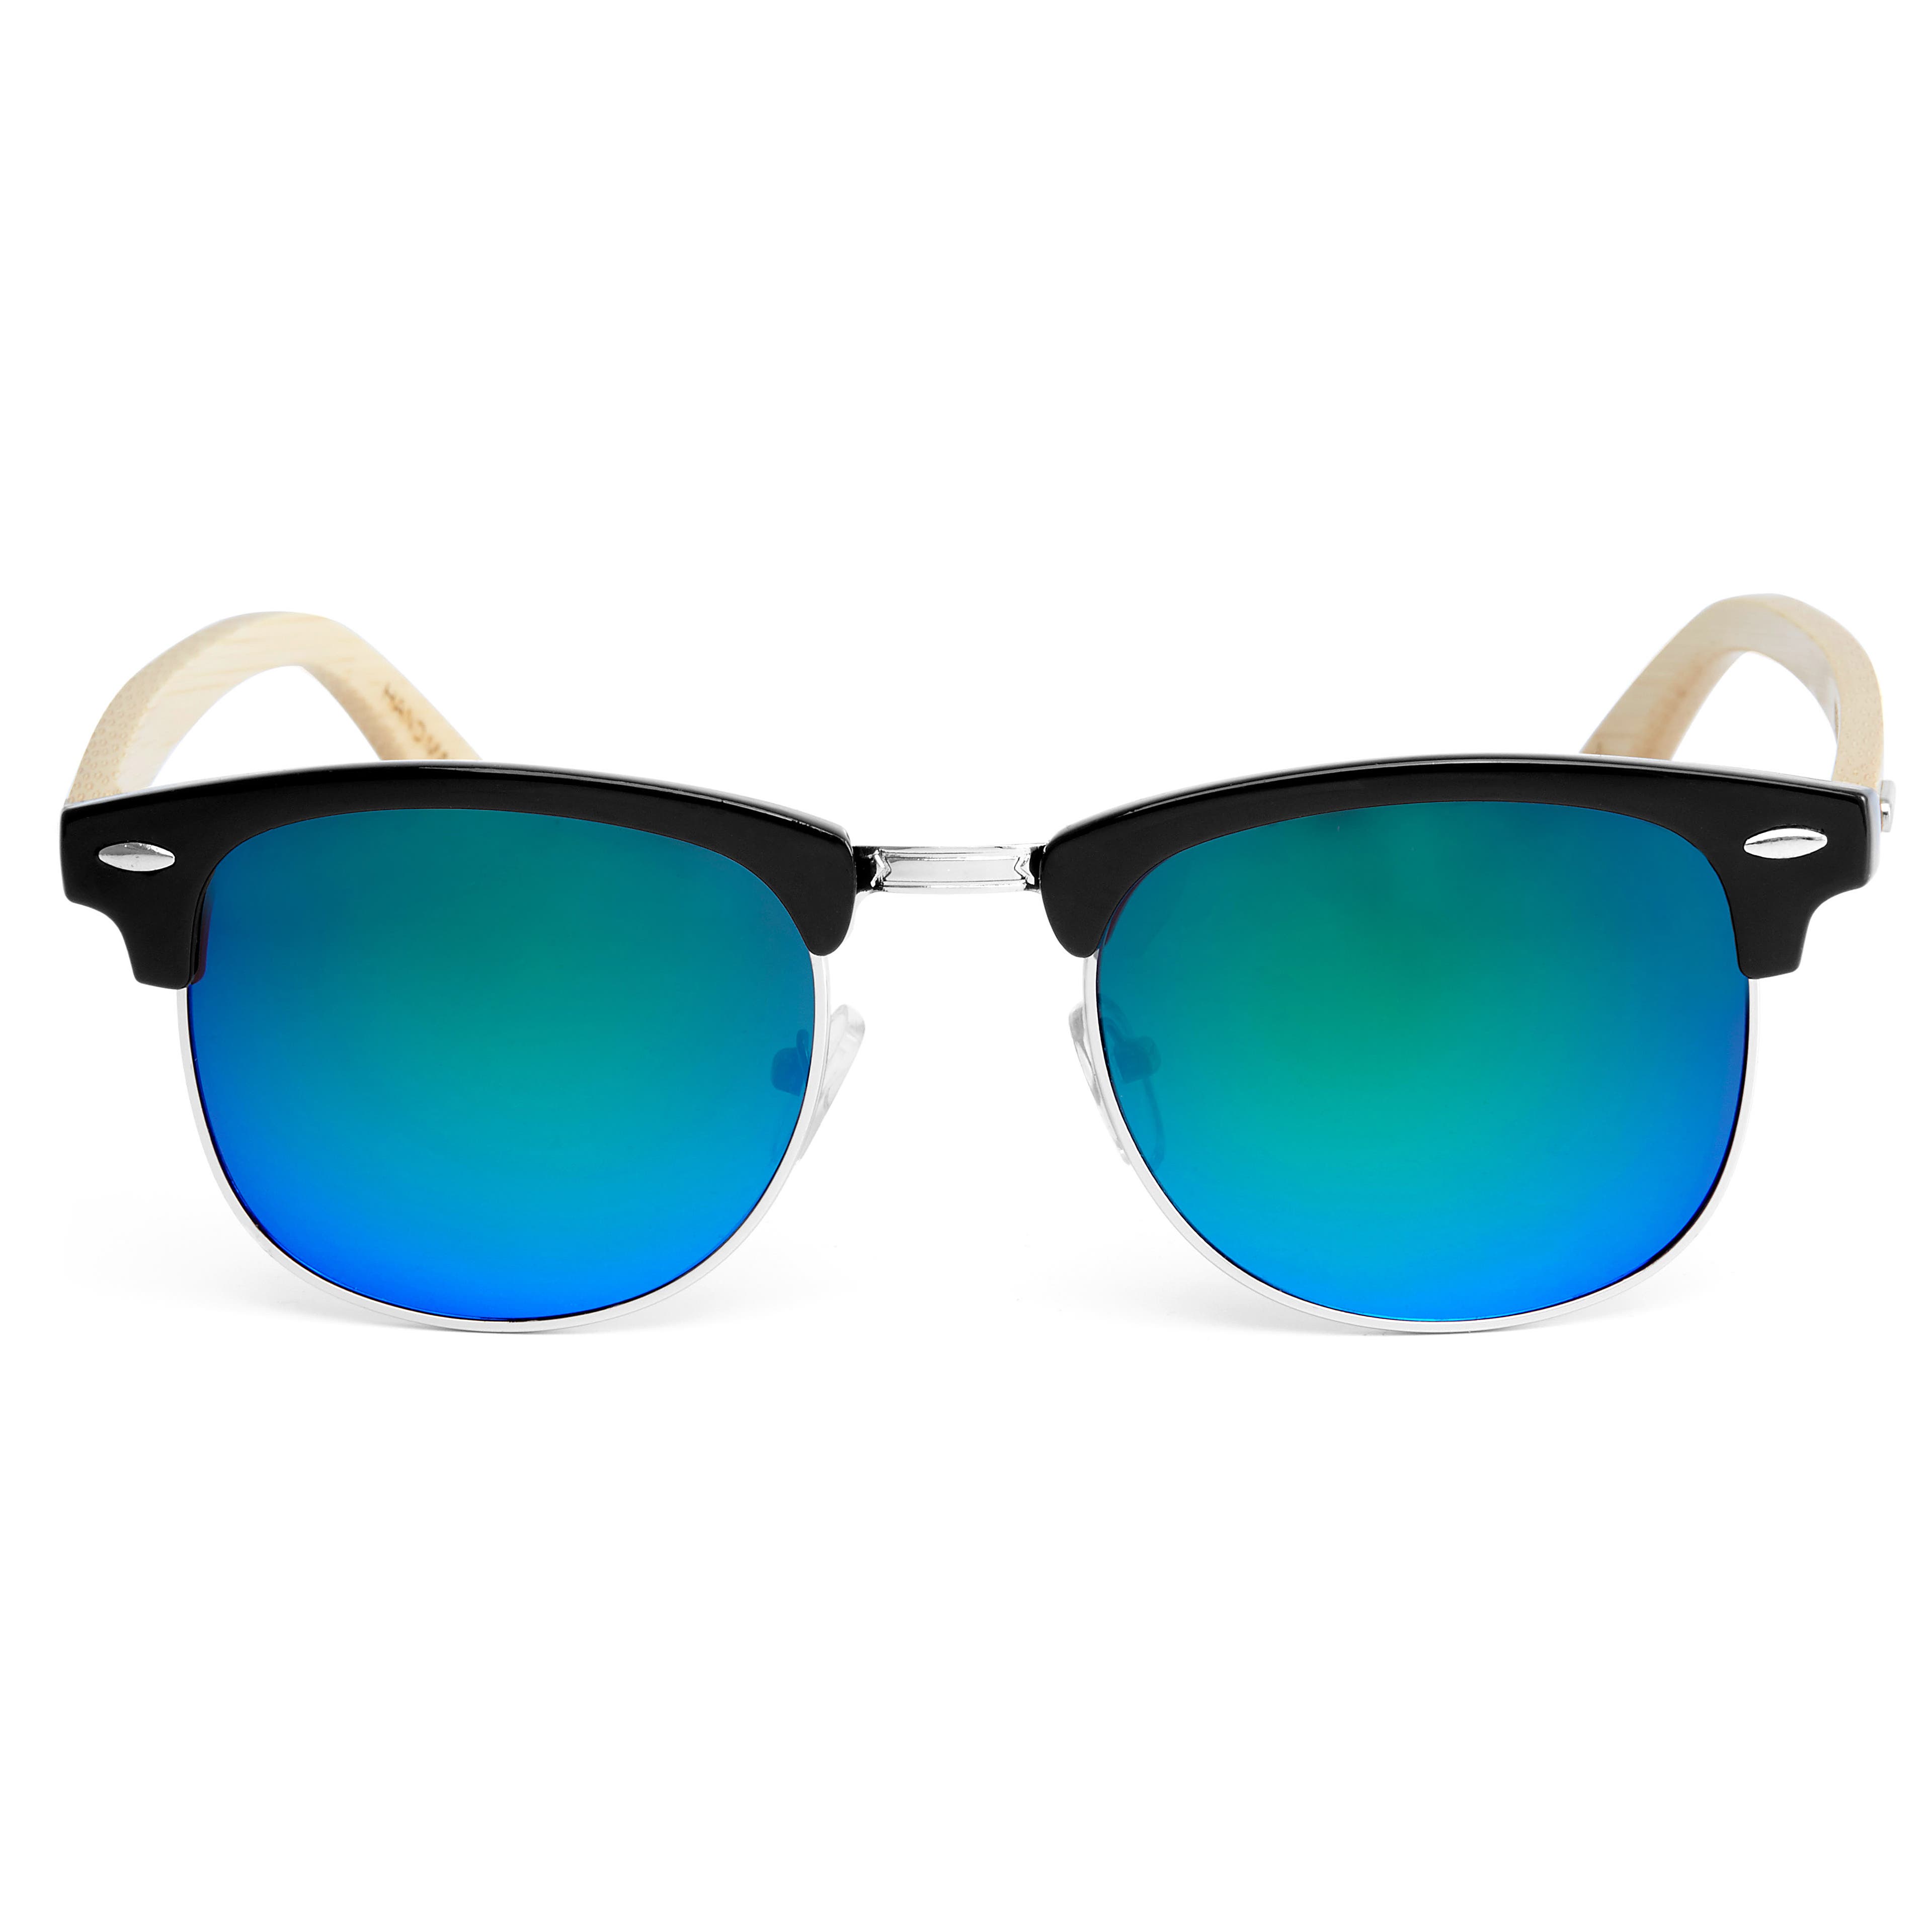 Modrozelené slnečné okuliare s drevenými nožičkami